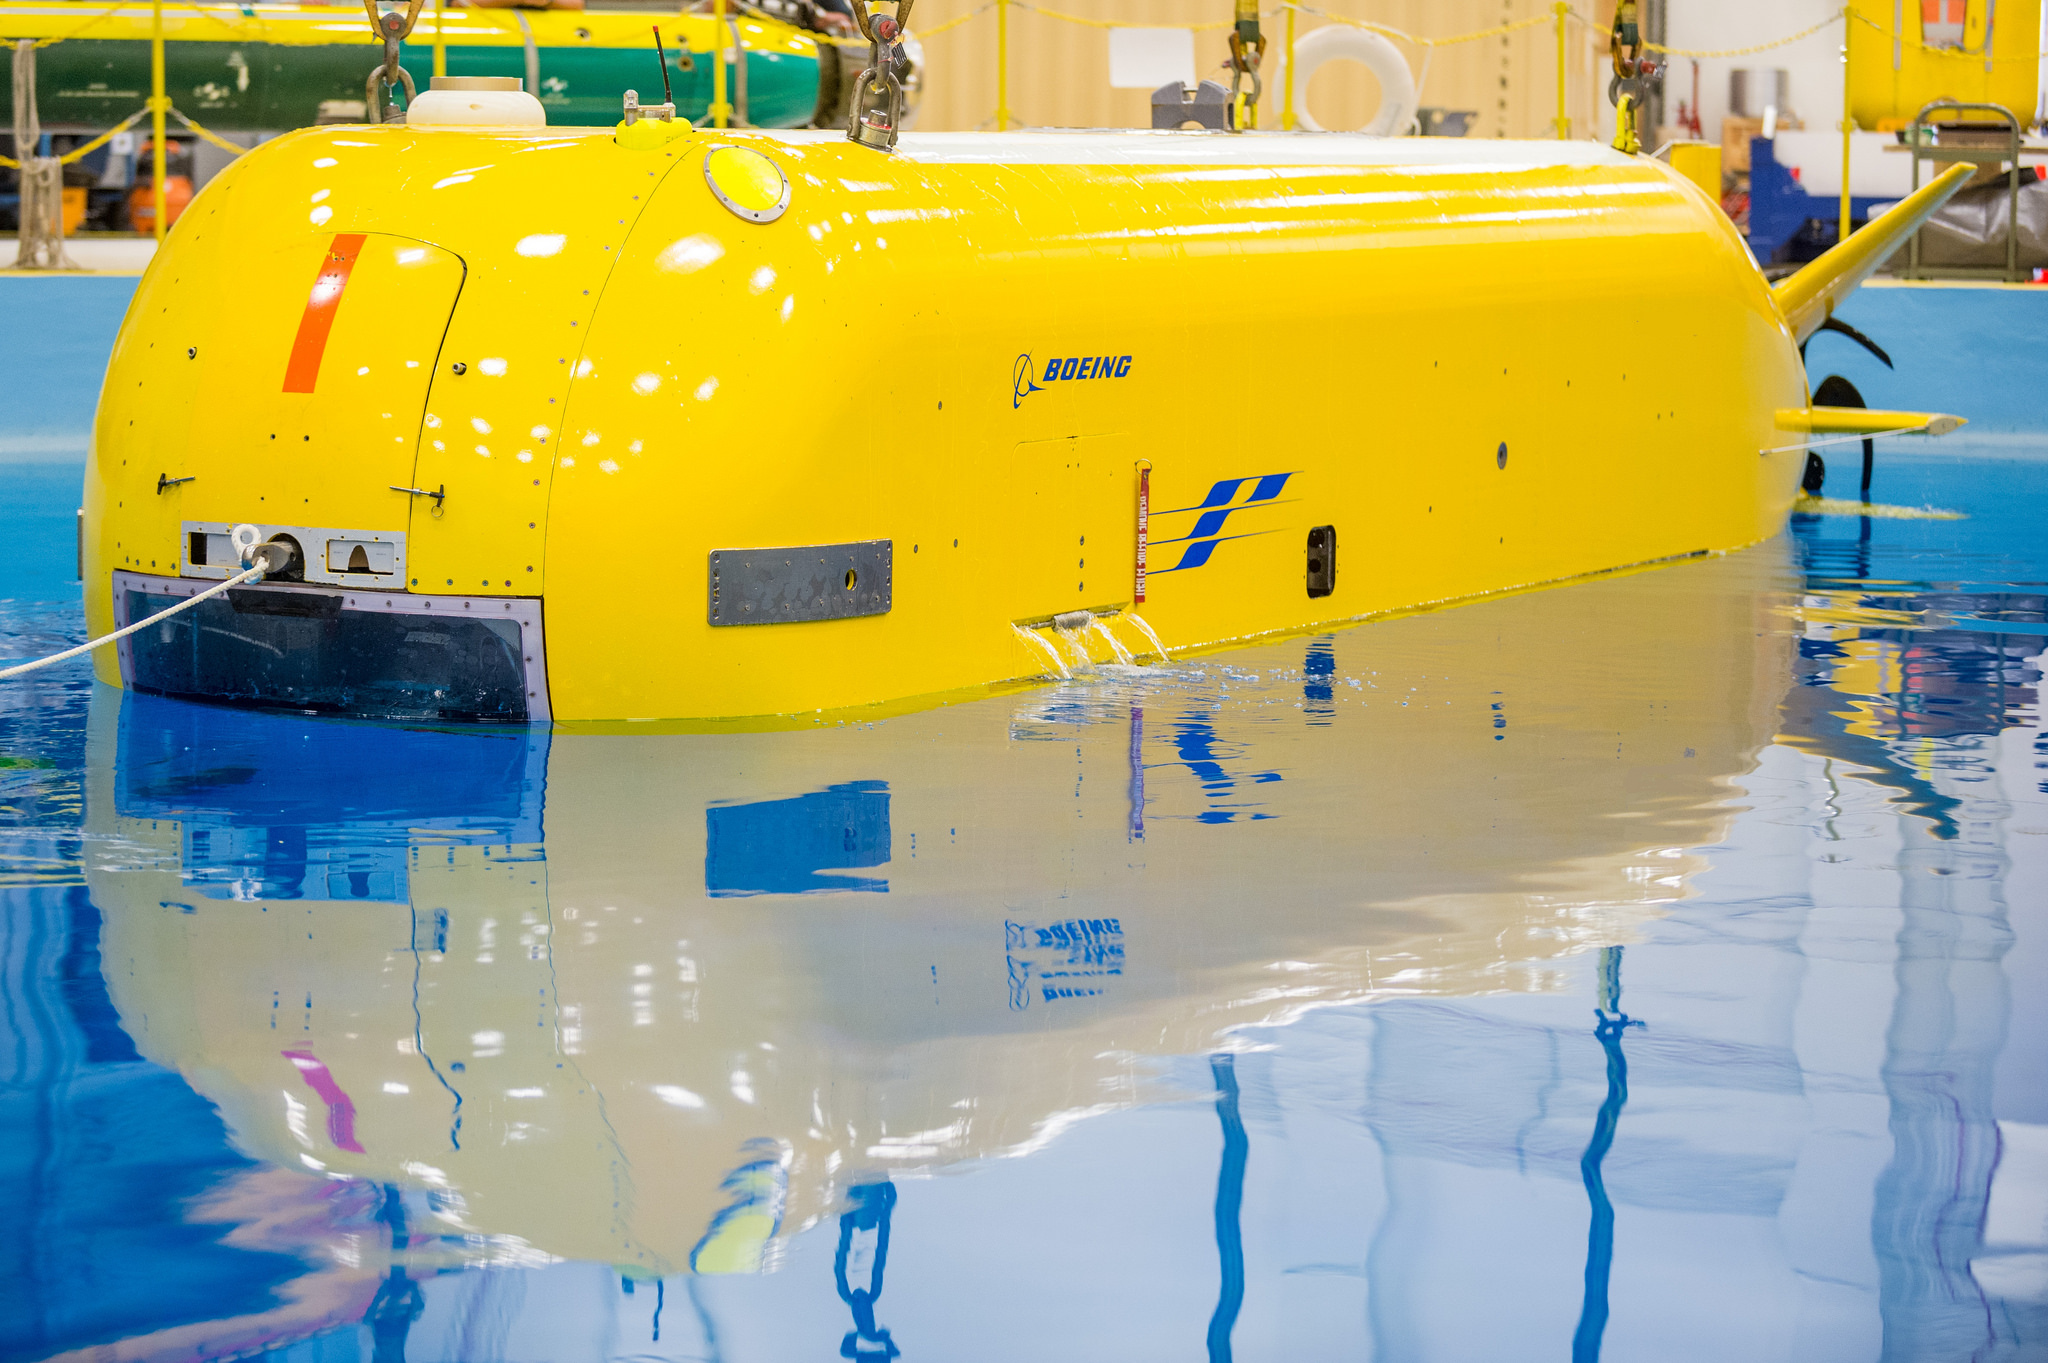 Autonomous Underwater Robots Could Cause Deadly Accidents, Warns UN Think Tank